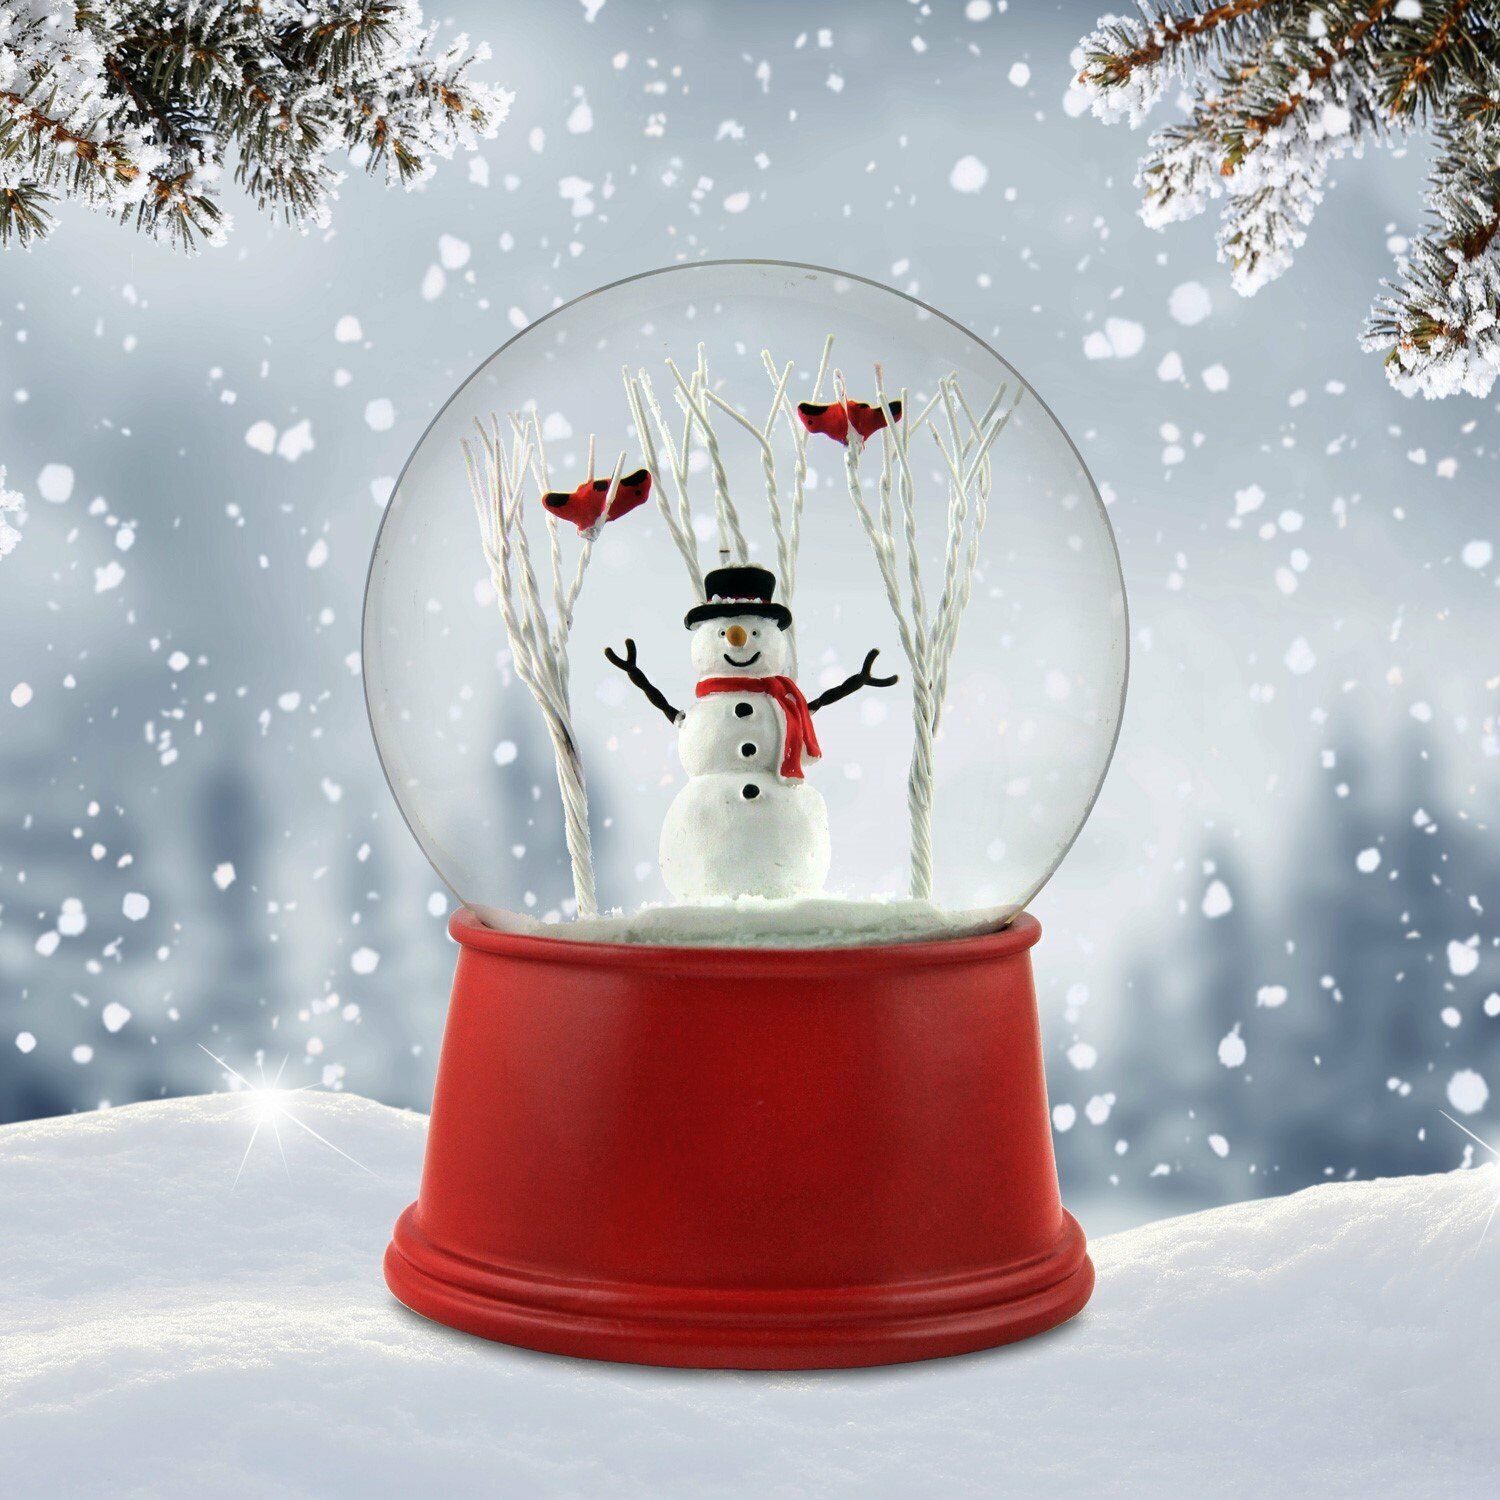 Snowman with Cardinals on a Tree Snow Globe San Francisco Music Box